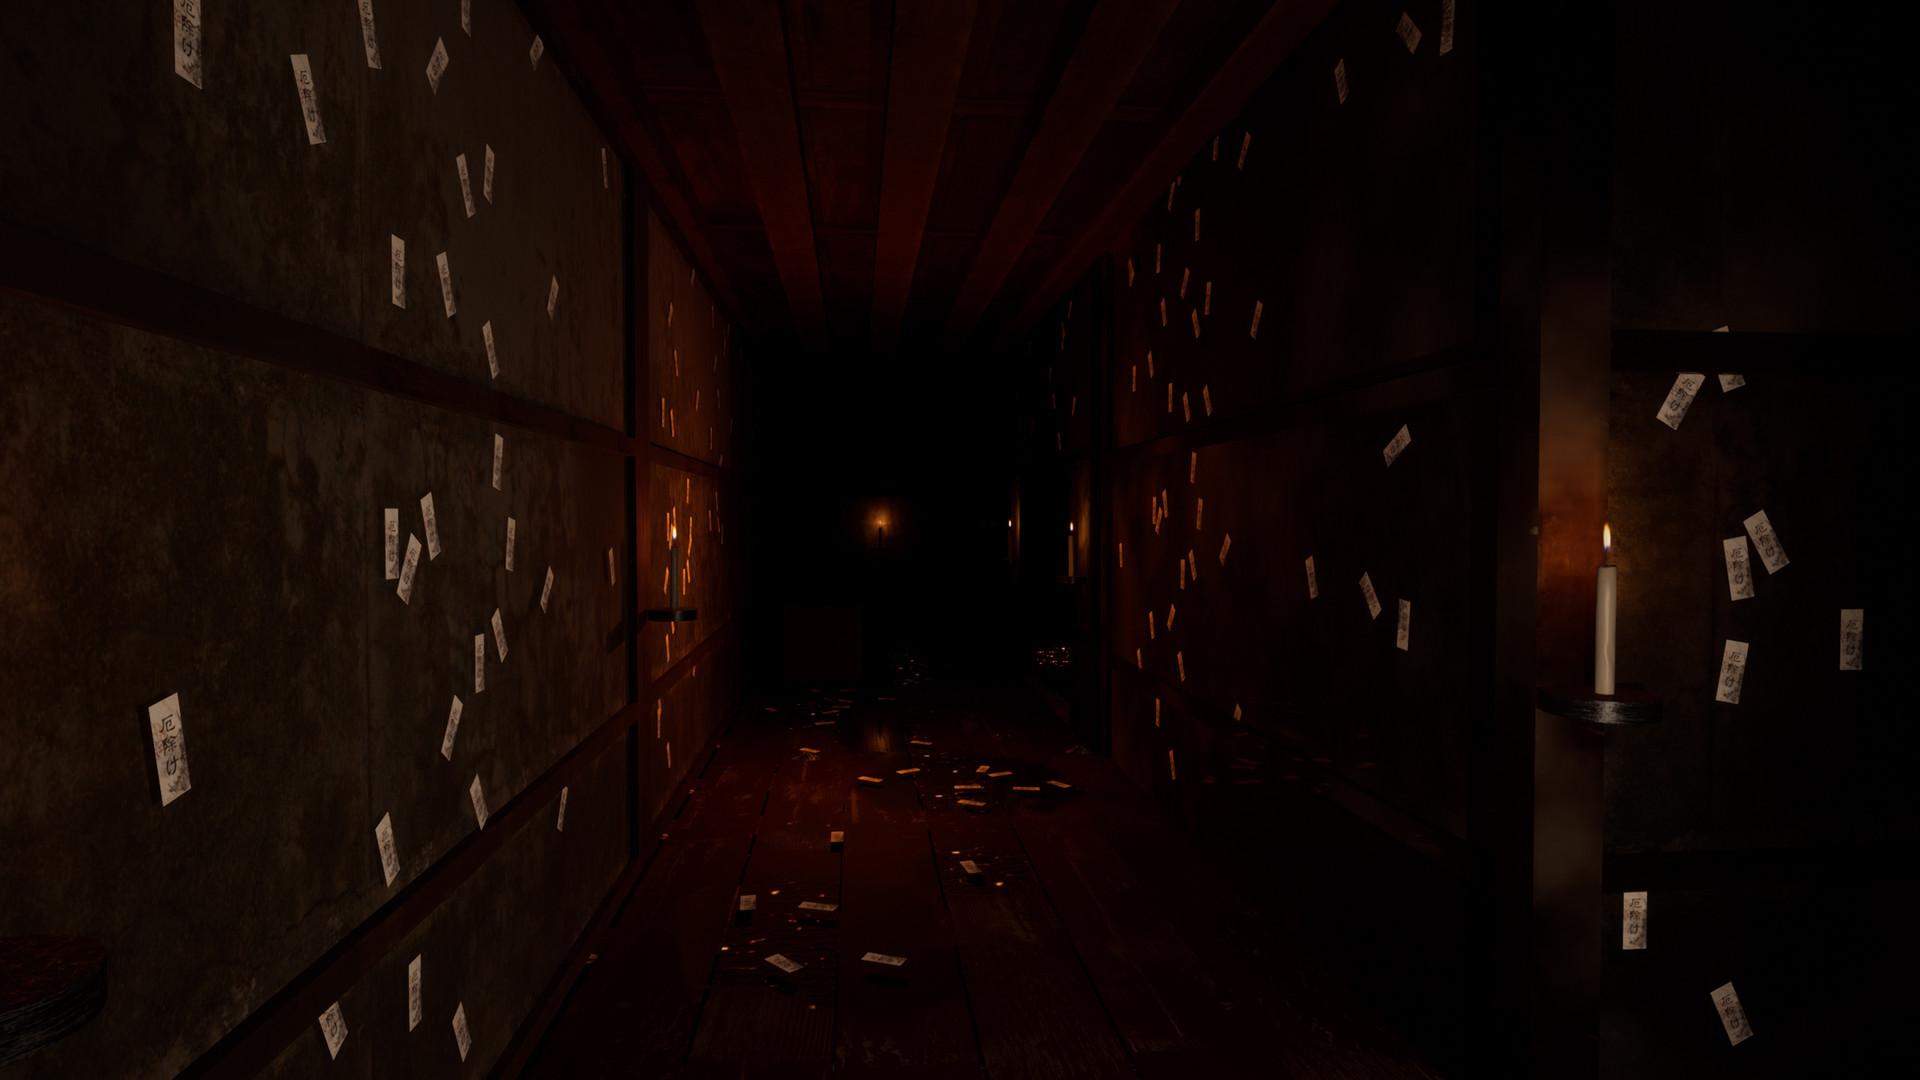 Screenshot №12 from game Malice